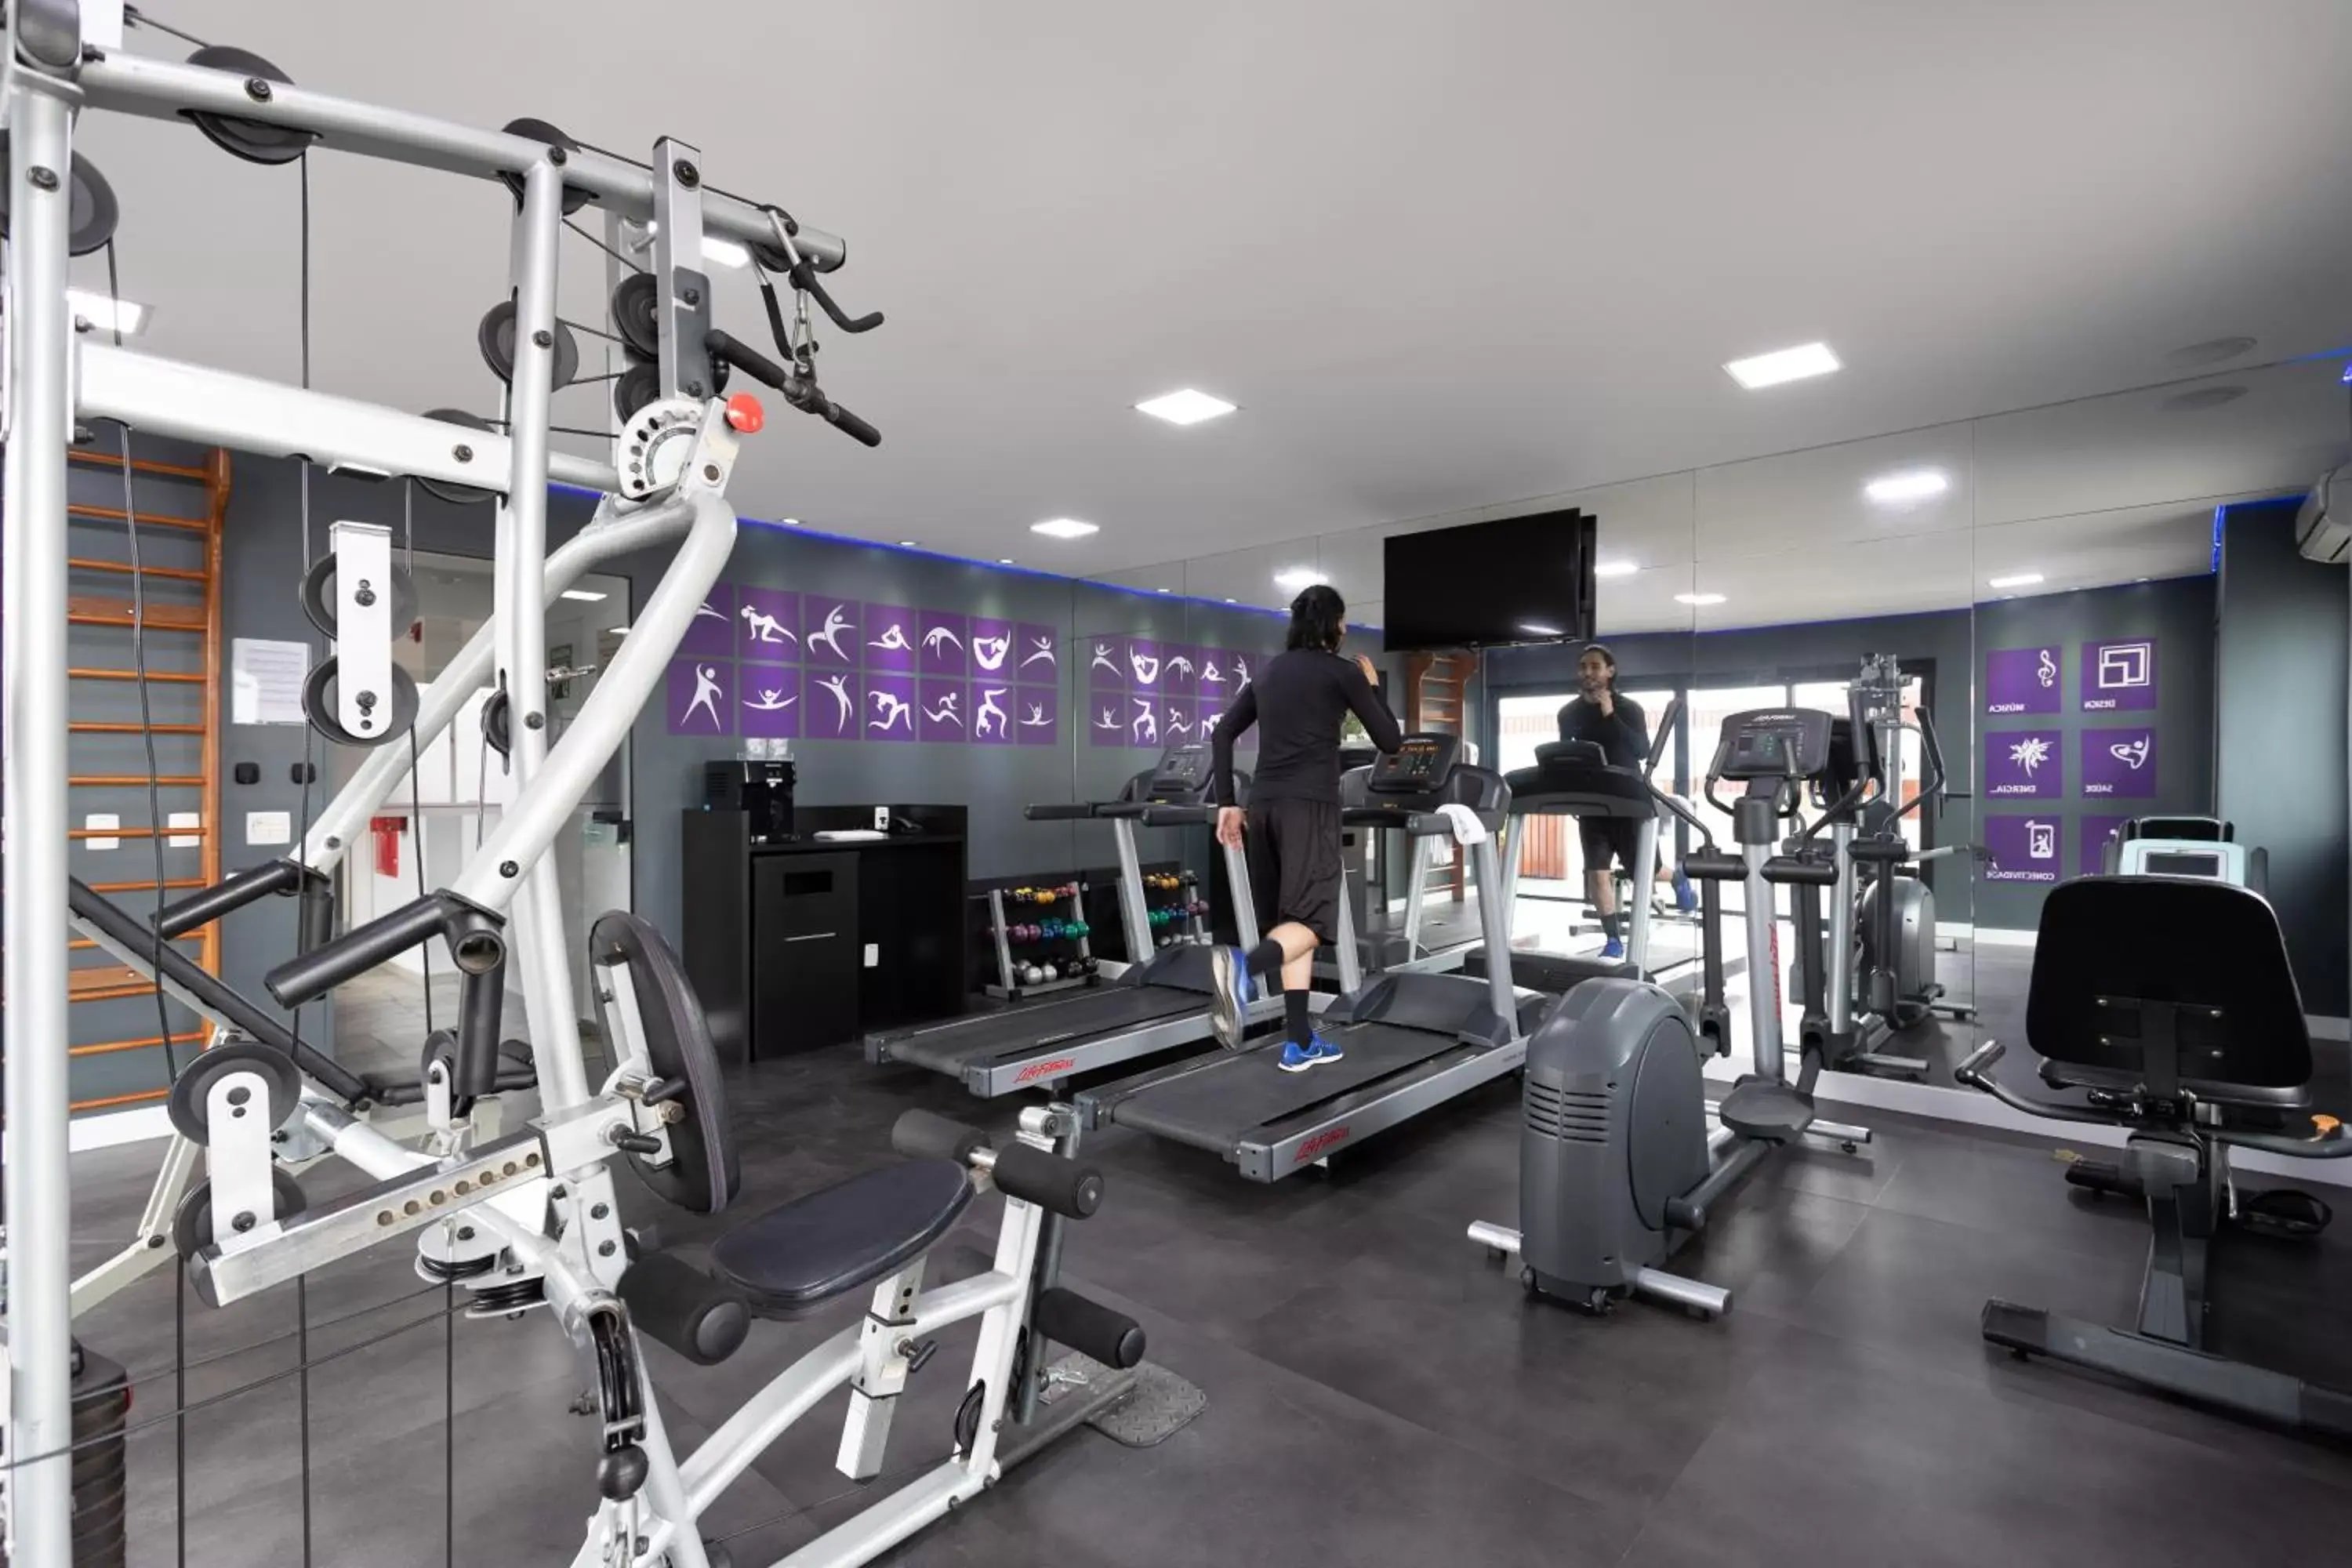 Fitness centre/facilities, Fitness Center/Facilities in Mercure Sao Paulo Pamplona